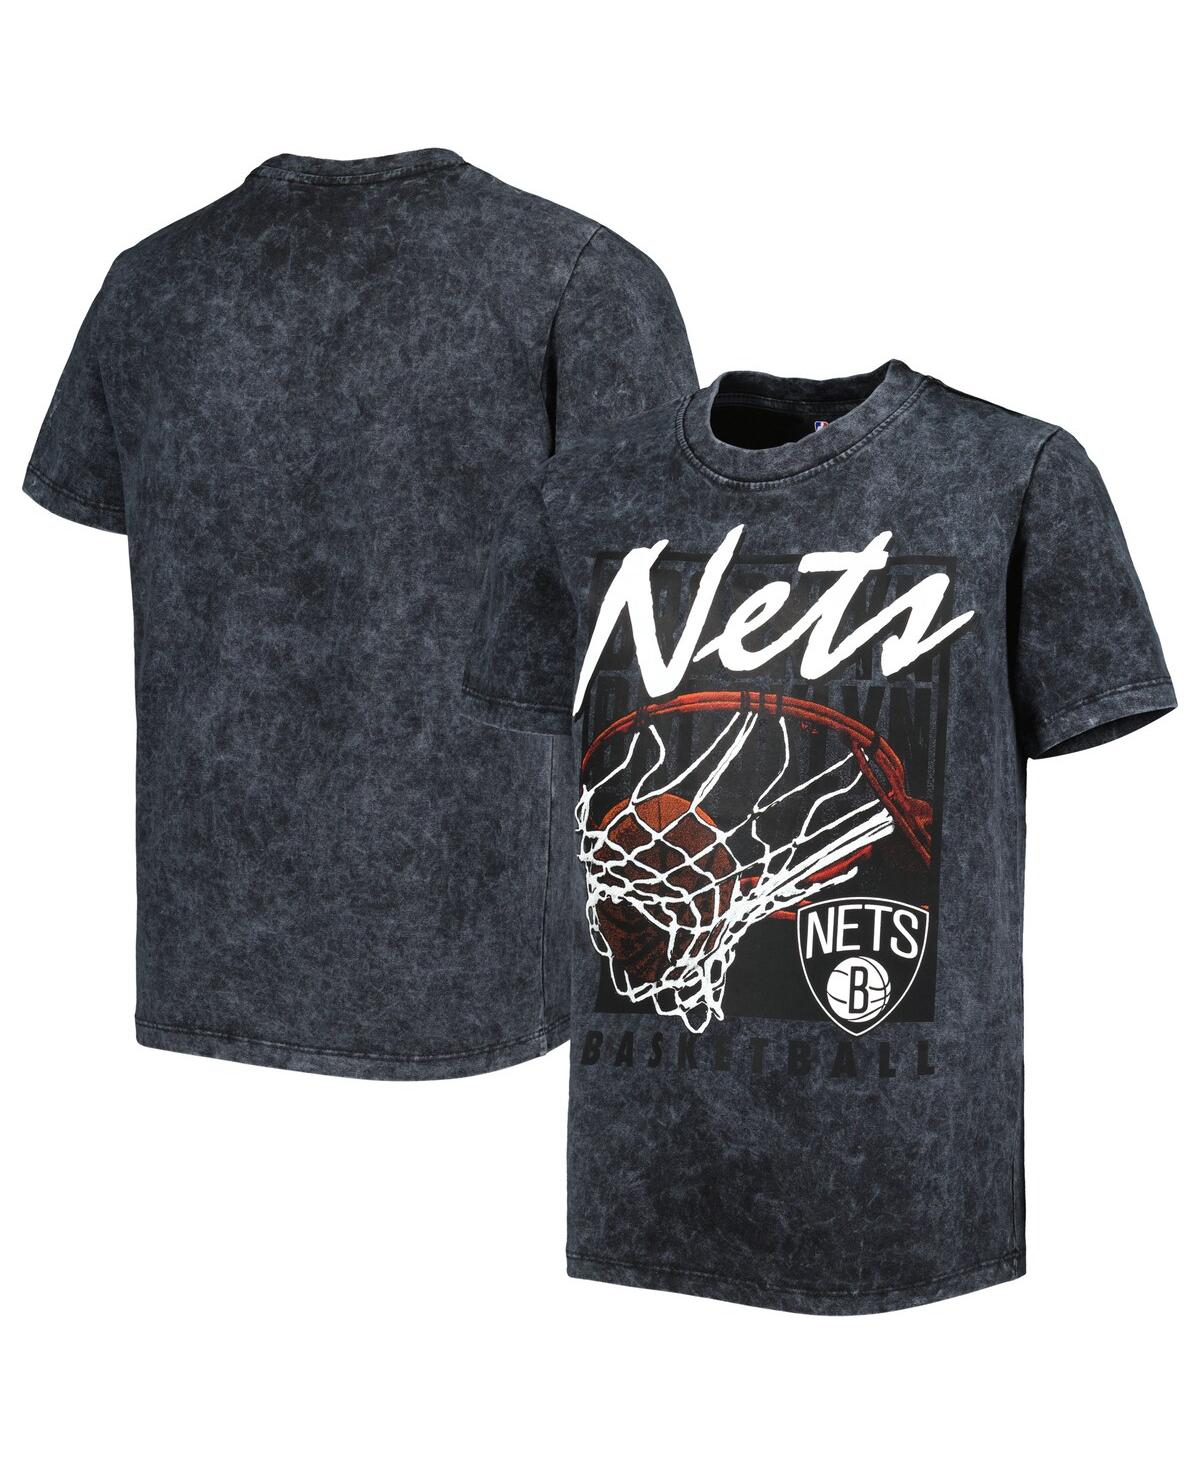 Outerstuff Kids' Big Boys And Girls Black Brooklyn Nets Mineral Wash Headliner T-shirt